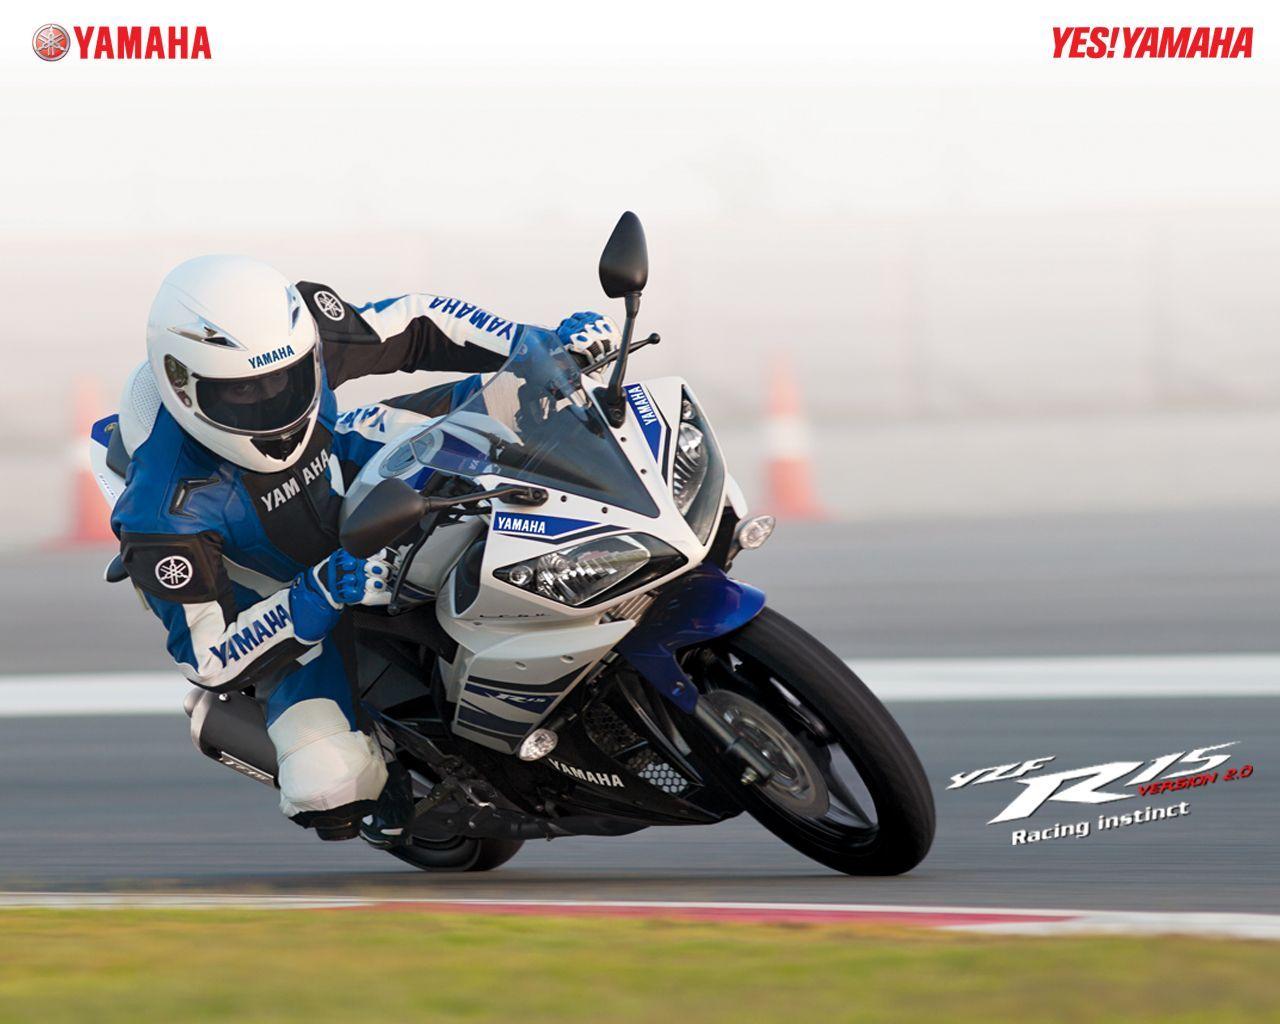 pic new posts: Yamaha R15 V2 HD Wallpaper. Best Games Wallpaper